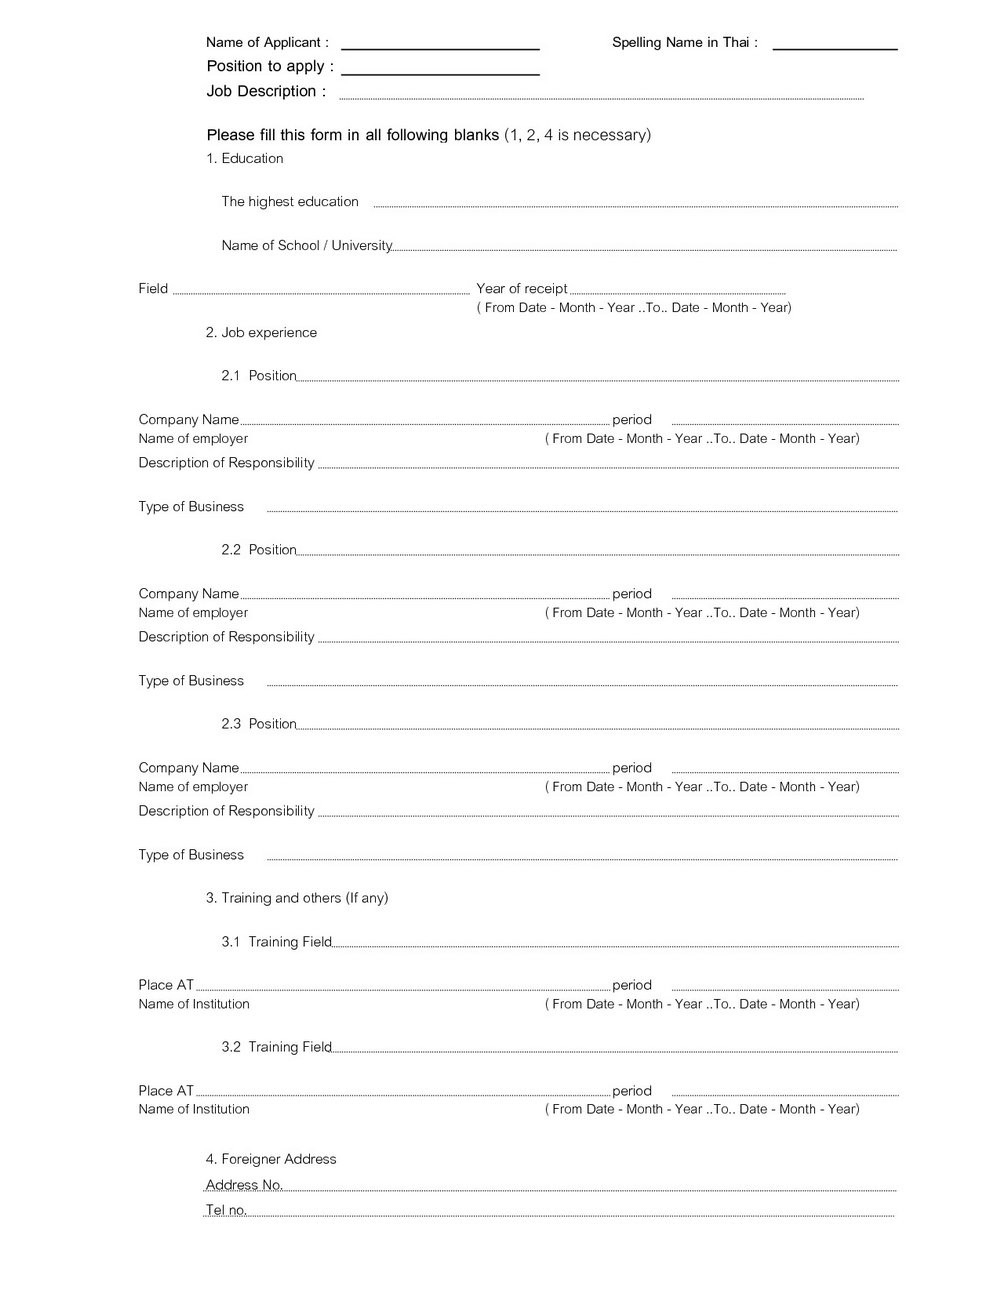 Free Online Resume Templates Printable - Viaweb.co - Free Online Resume Templates Printable